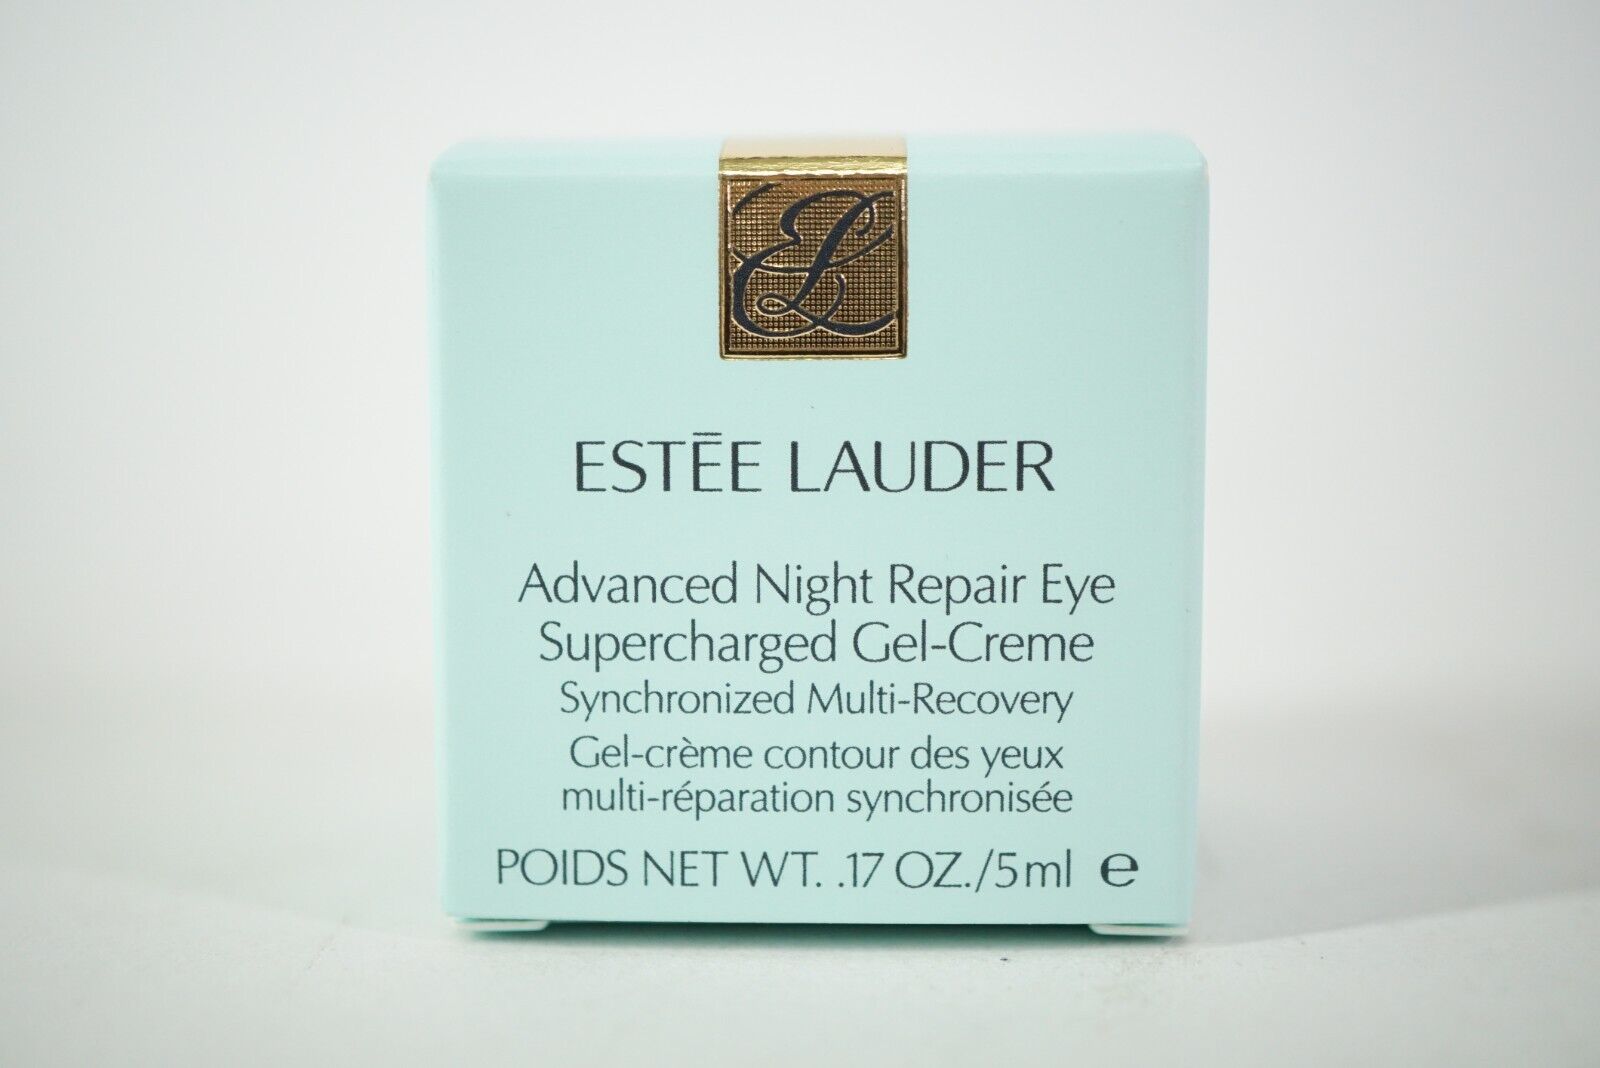 ESTEE LAUDER Advanced Night Repair Eye Supercharged Gel-Creme 5ml